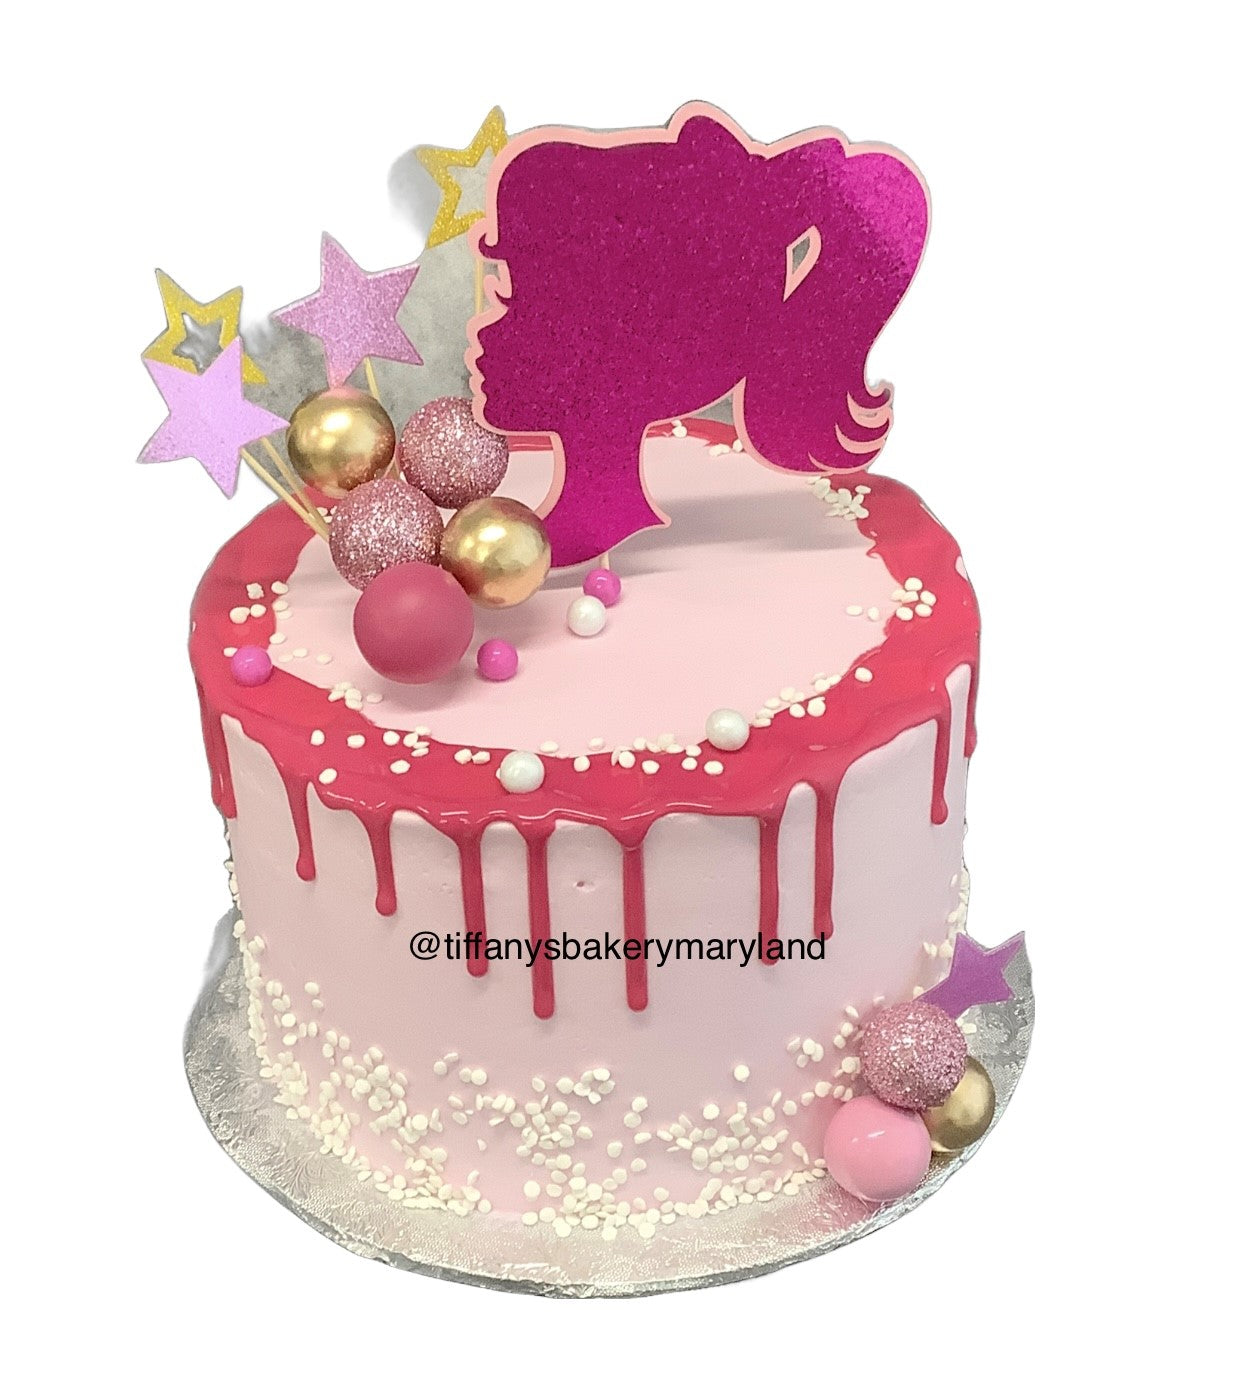 Buy/Send Unicorn 3 Layer Cake Online @ Rs. 5999 - SendBestGift